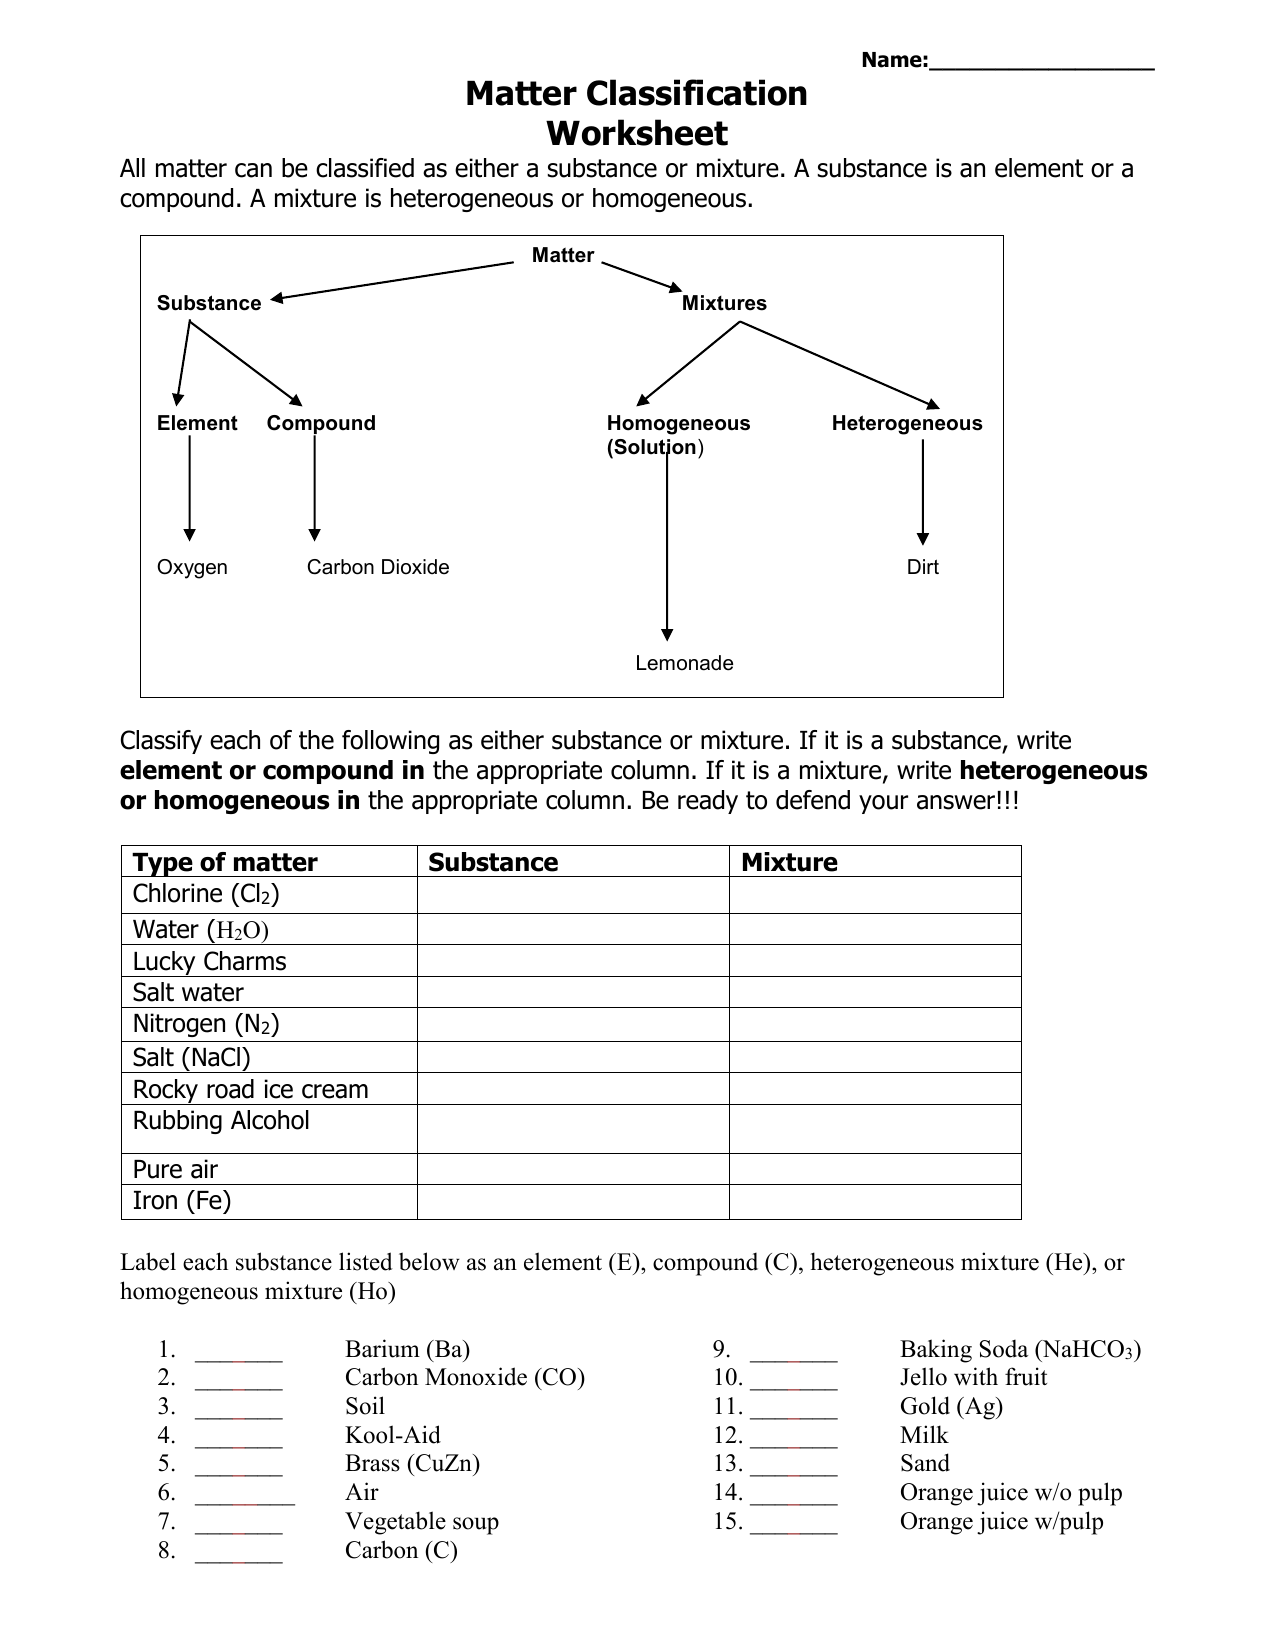 Matter classification worksheet Throughout Classifying Matter Worksheet Answers